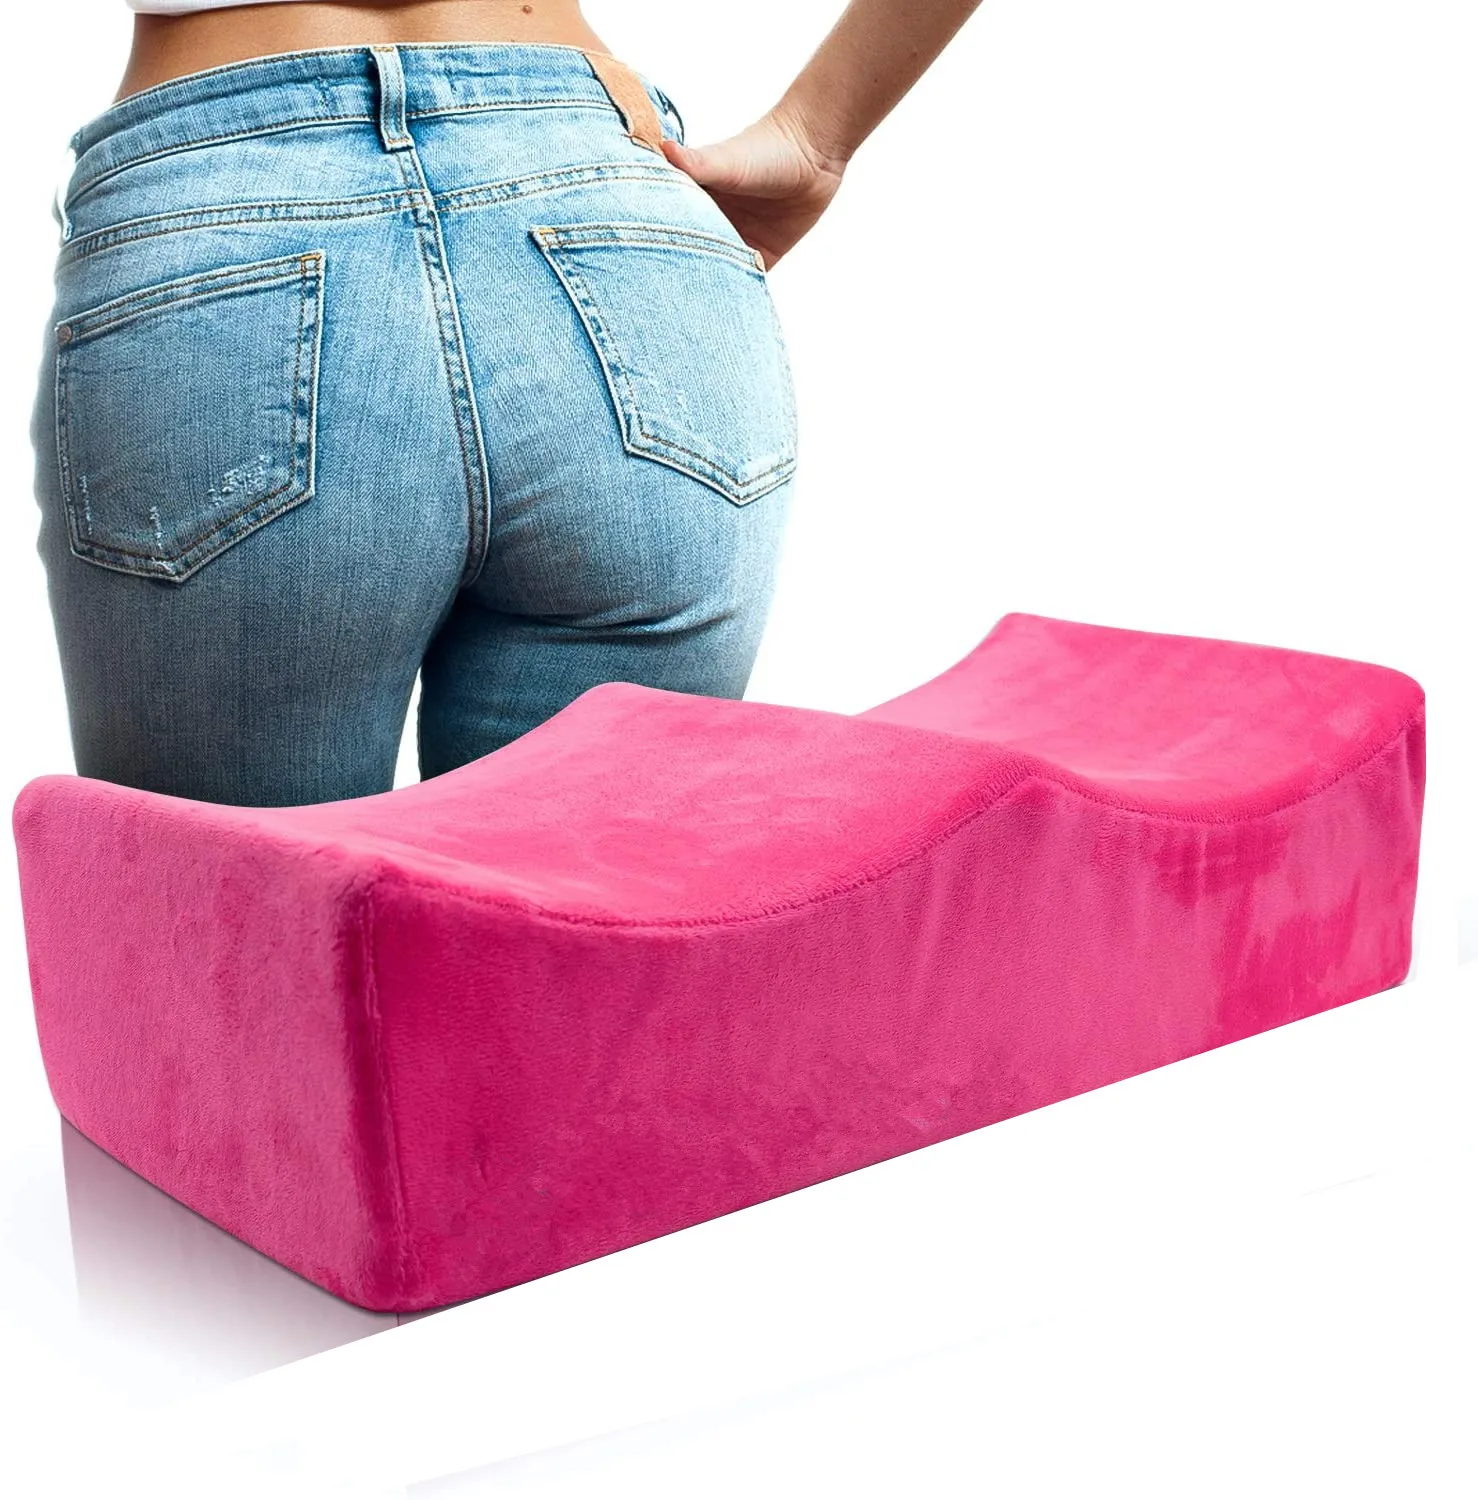 New Foam Buttock Cushion Sponge BBL Pillow Seat Pad, After Surgery